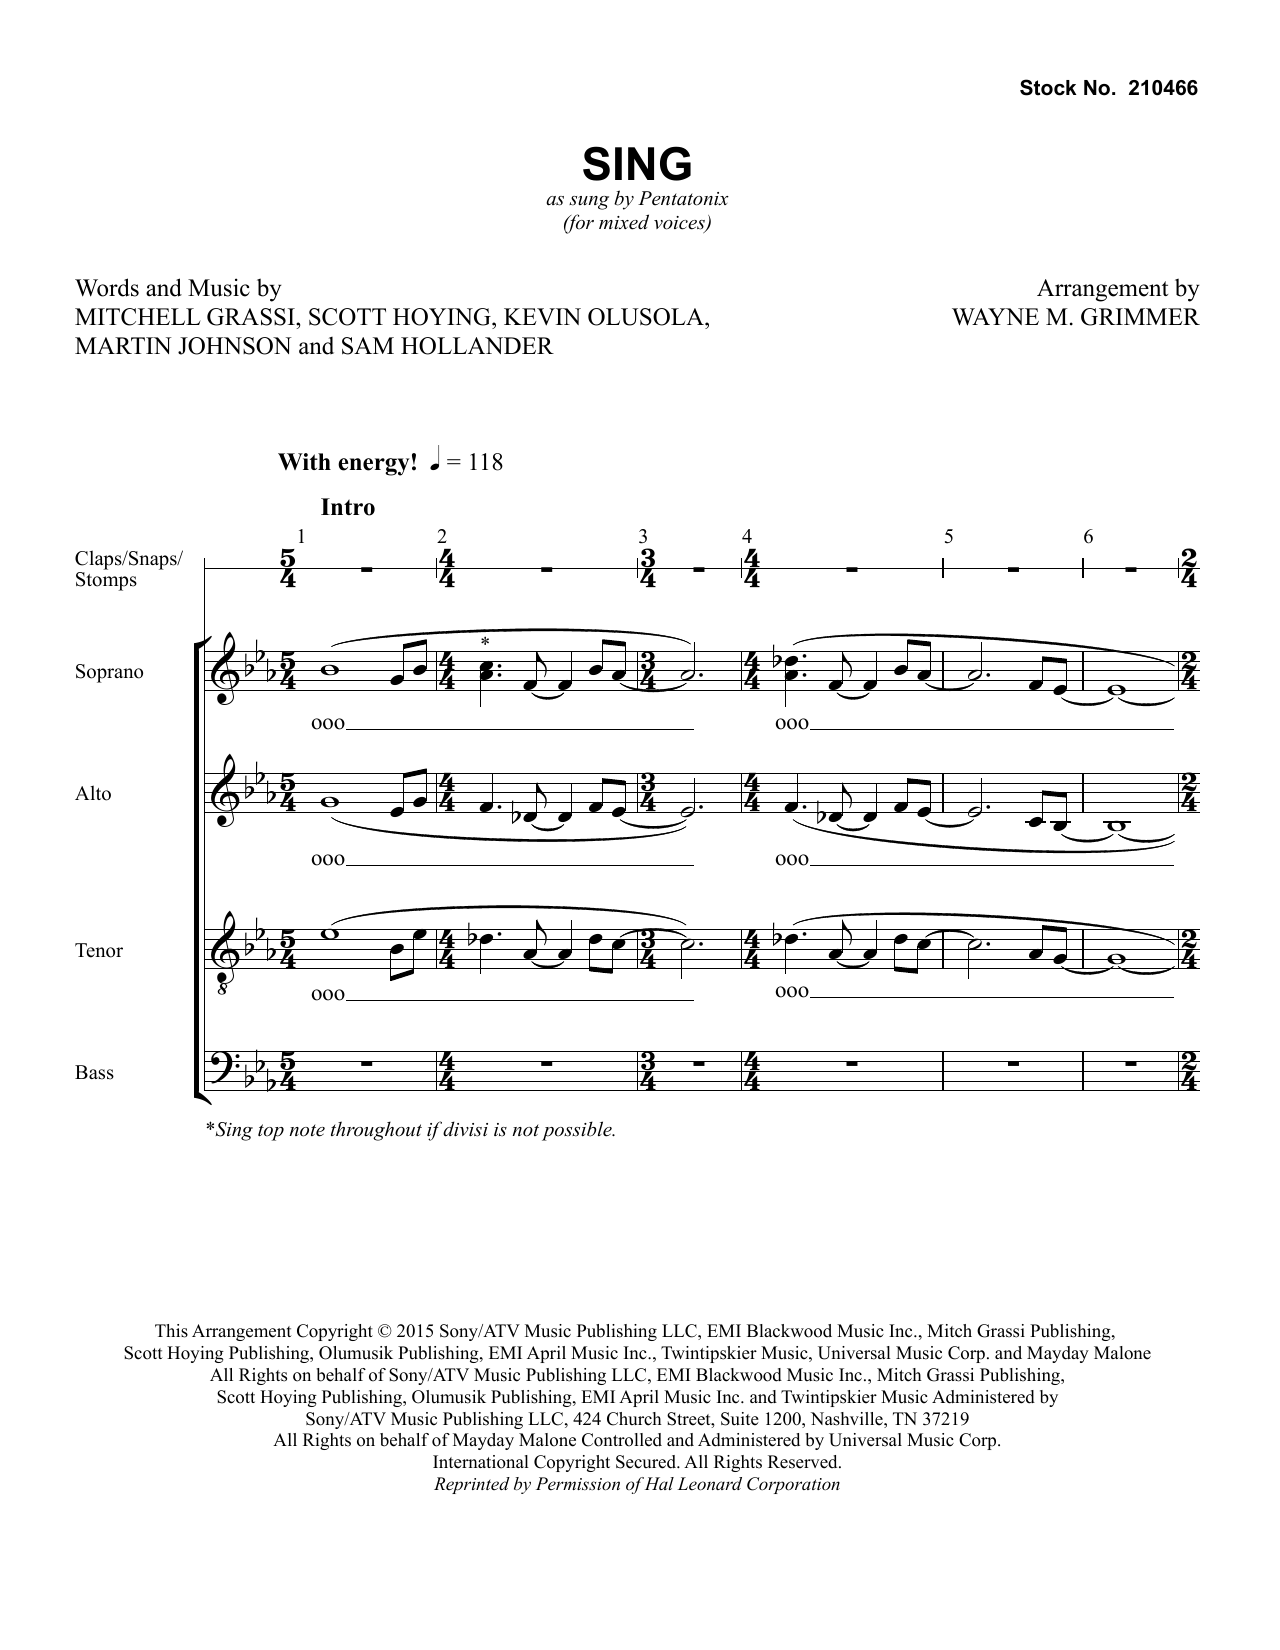 Pentatonix Sing (arr. Wayne Grimmer) Sheet Music Notes & Chords for SATB Choir - Download or Print PDF